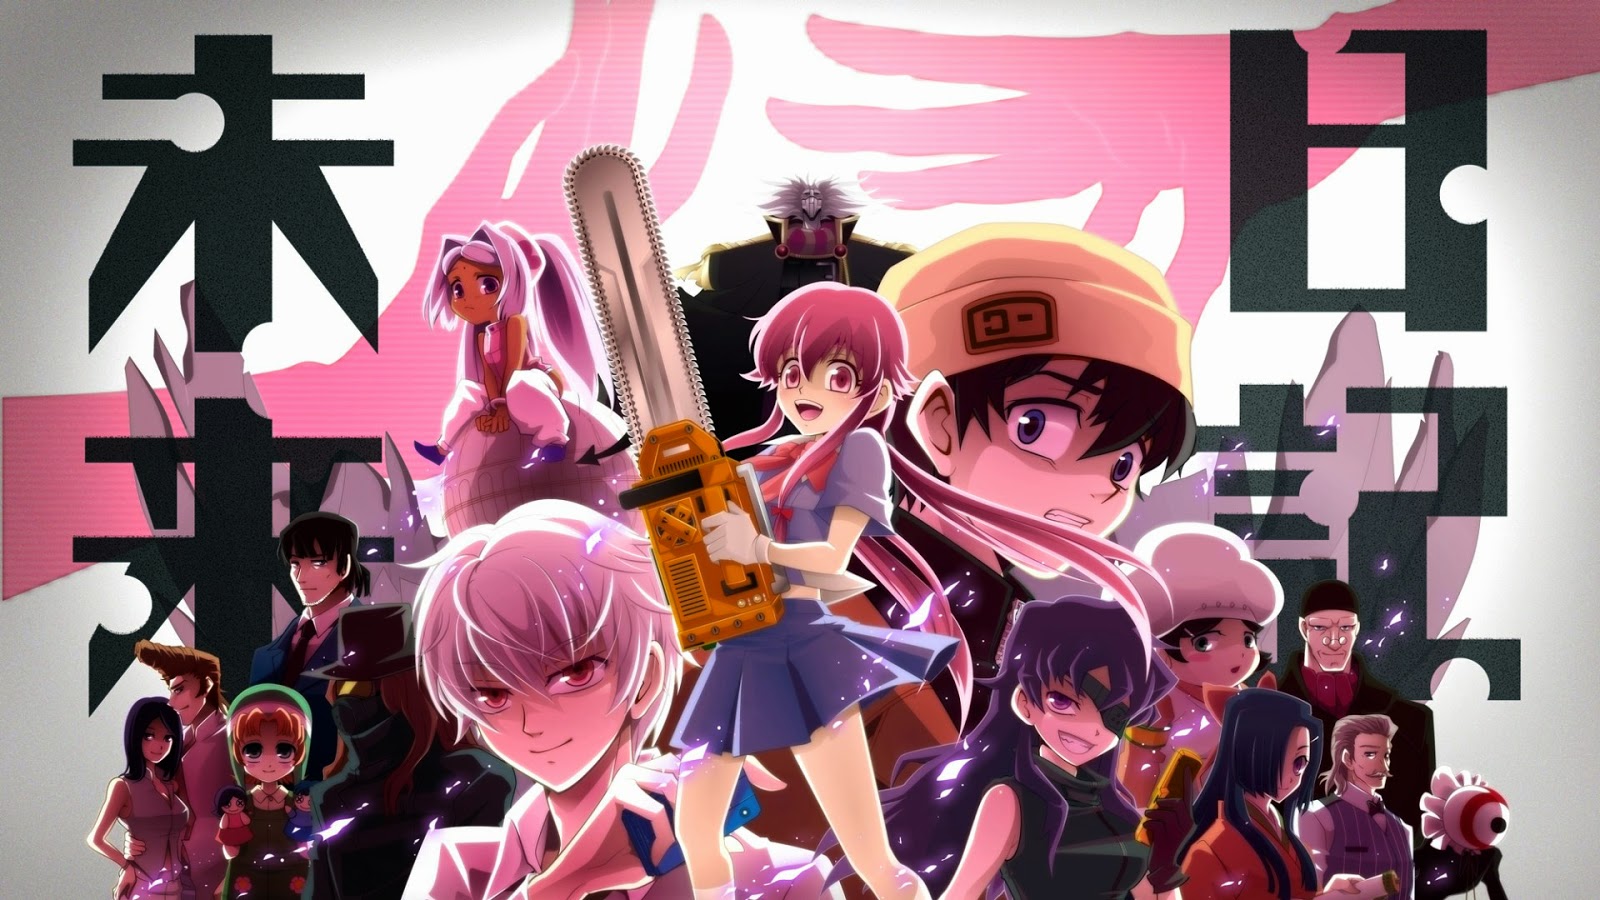 loucos por anime site oficial - loucos por anime oficial